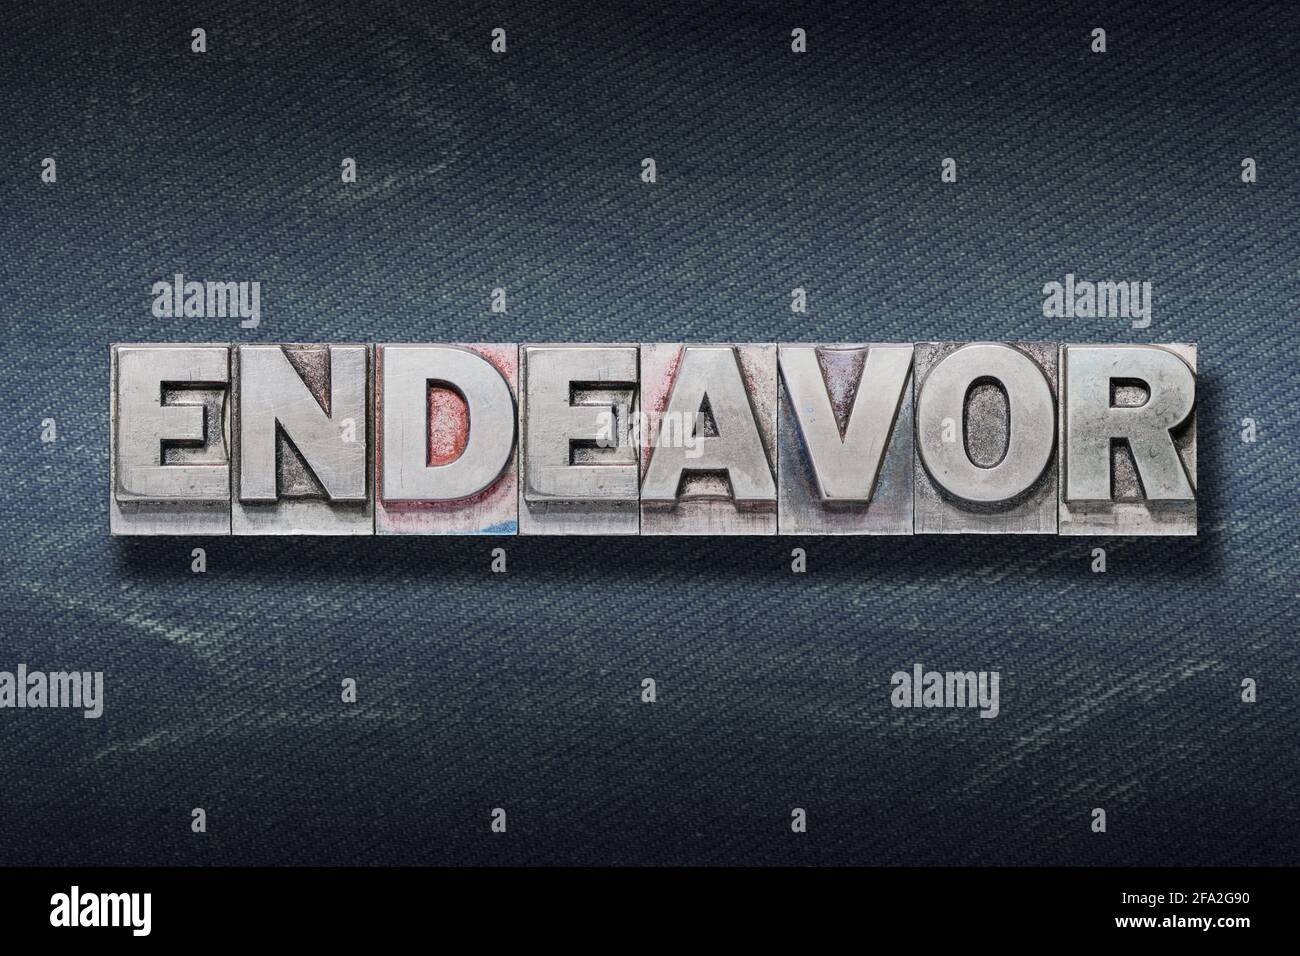 endeavor word made from metallic letterpress on dark jeans background Stock Photo